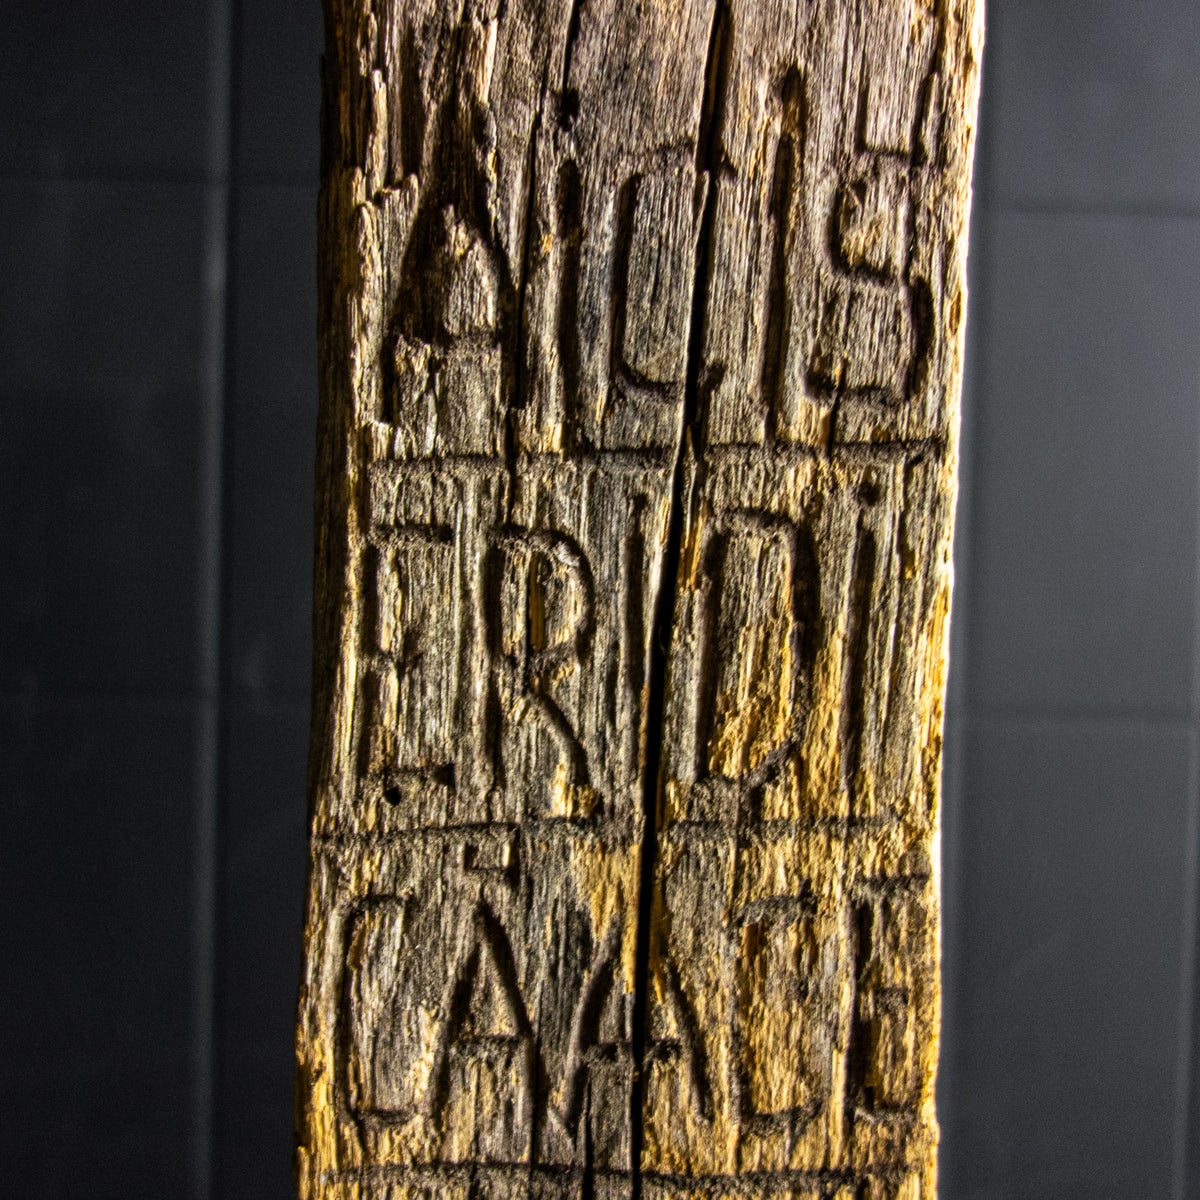 Wooden Crosses | Transylvania - Romania |IXXth Century